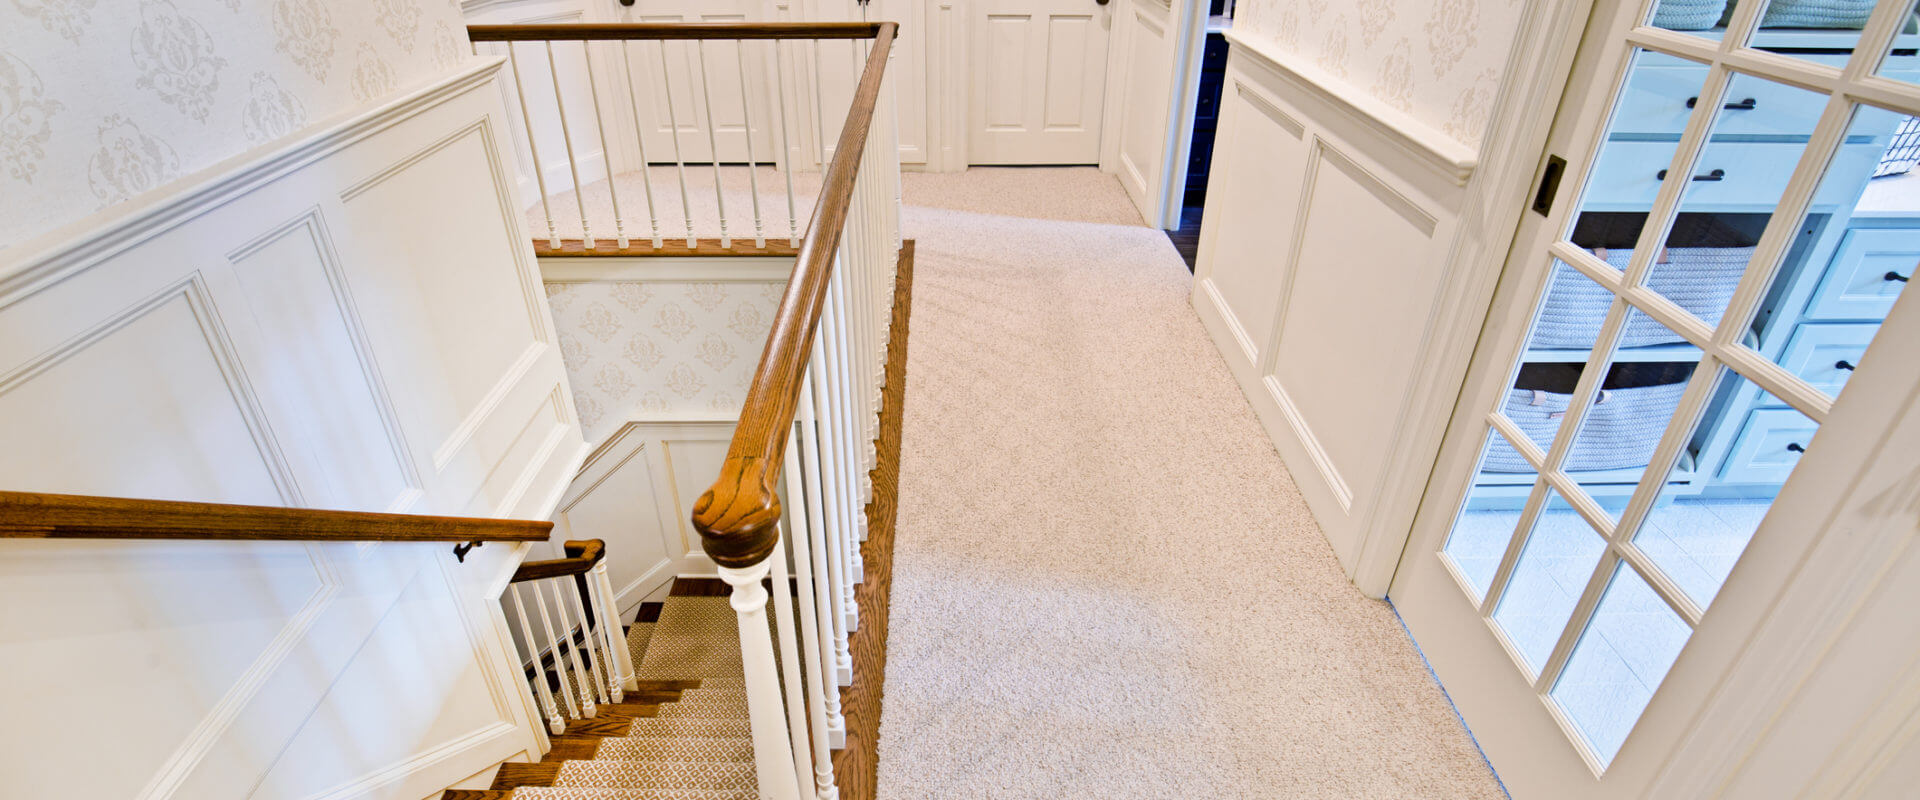 Installing a Stairway Carpet Runner is a Good Idea